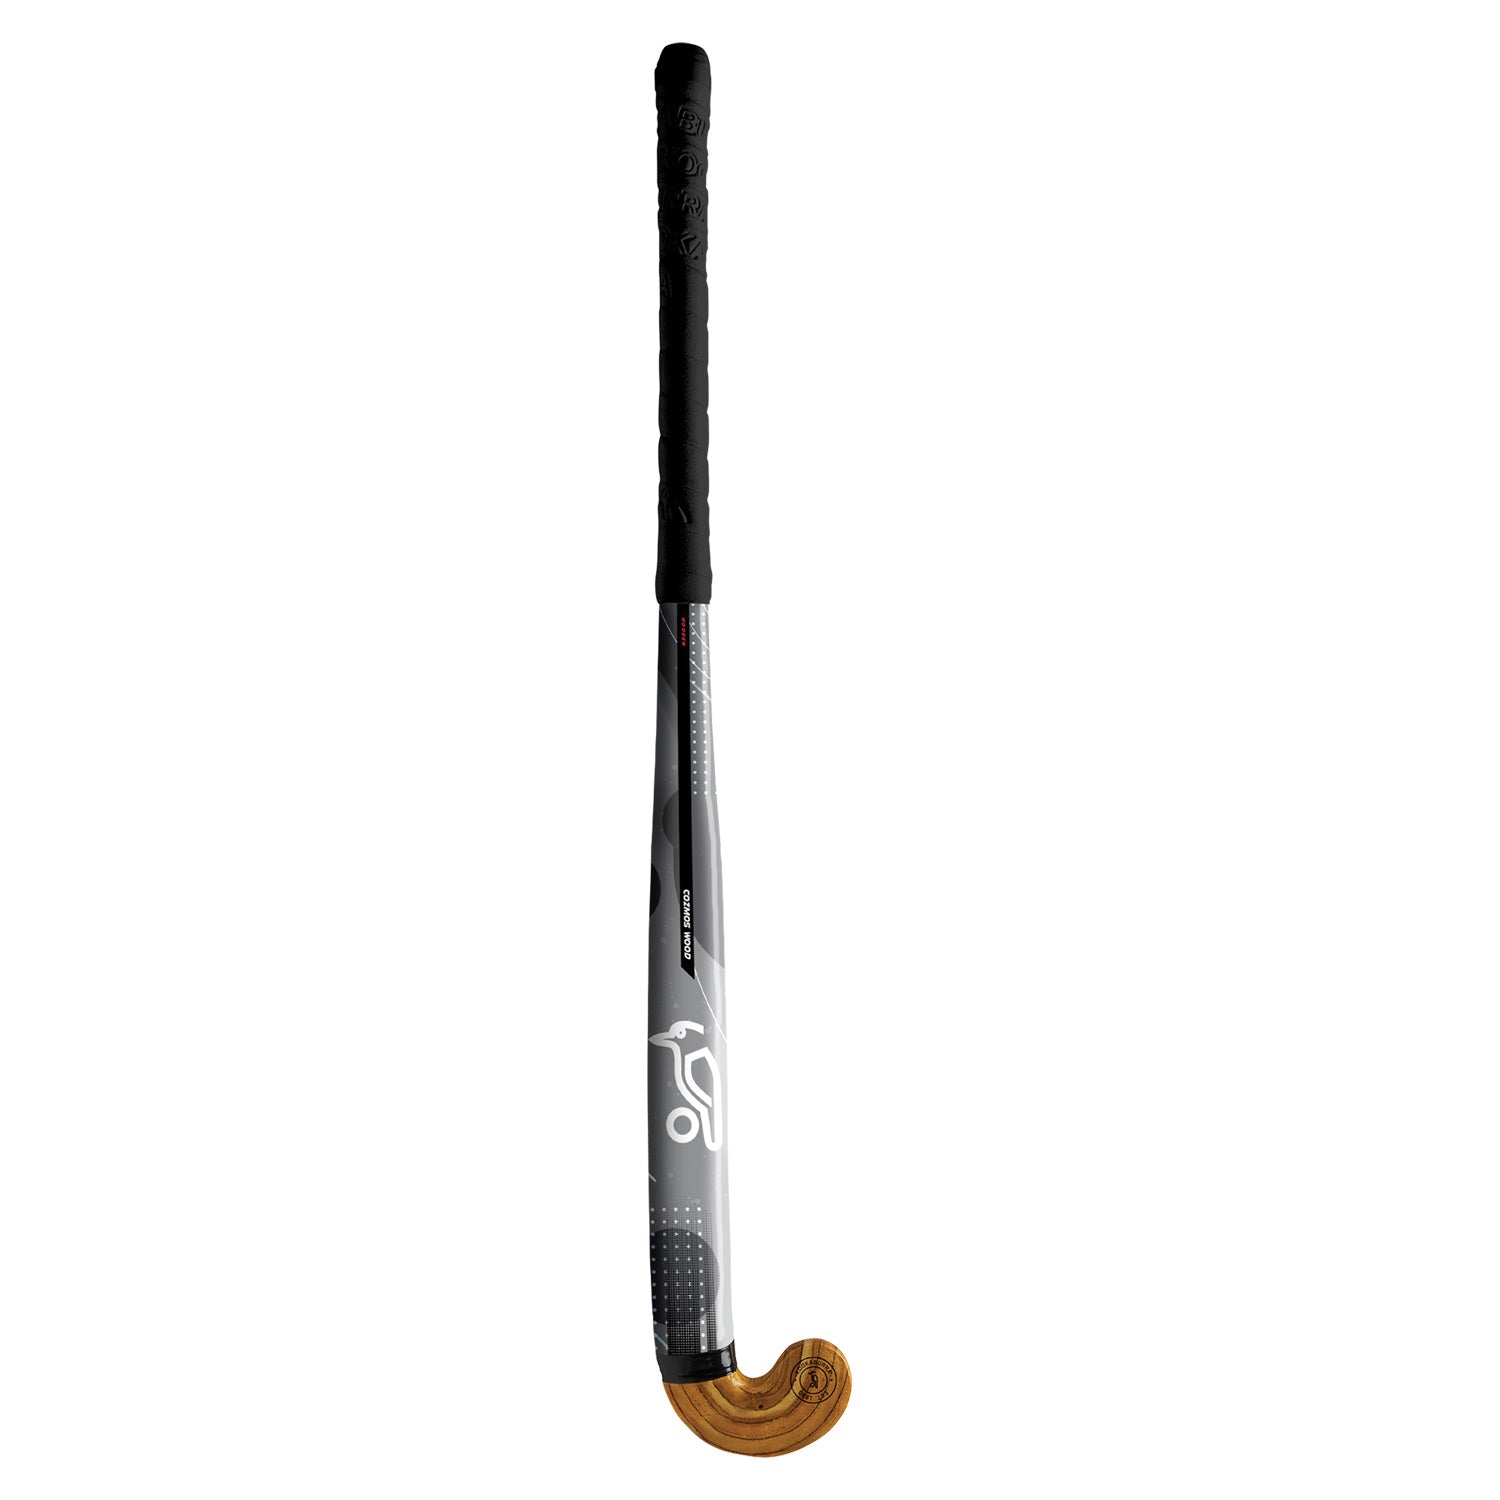 Kookaburra Cozmos Wooden 34 Hockey Stick